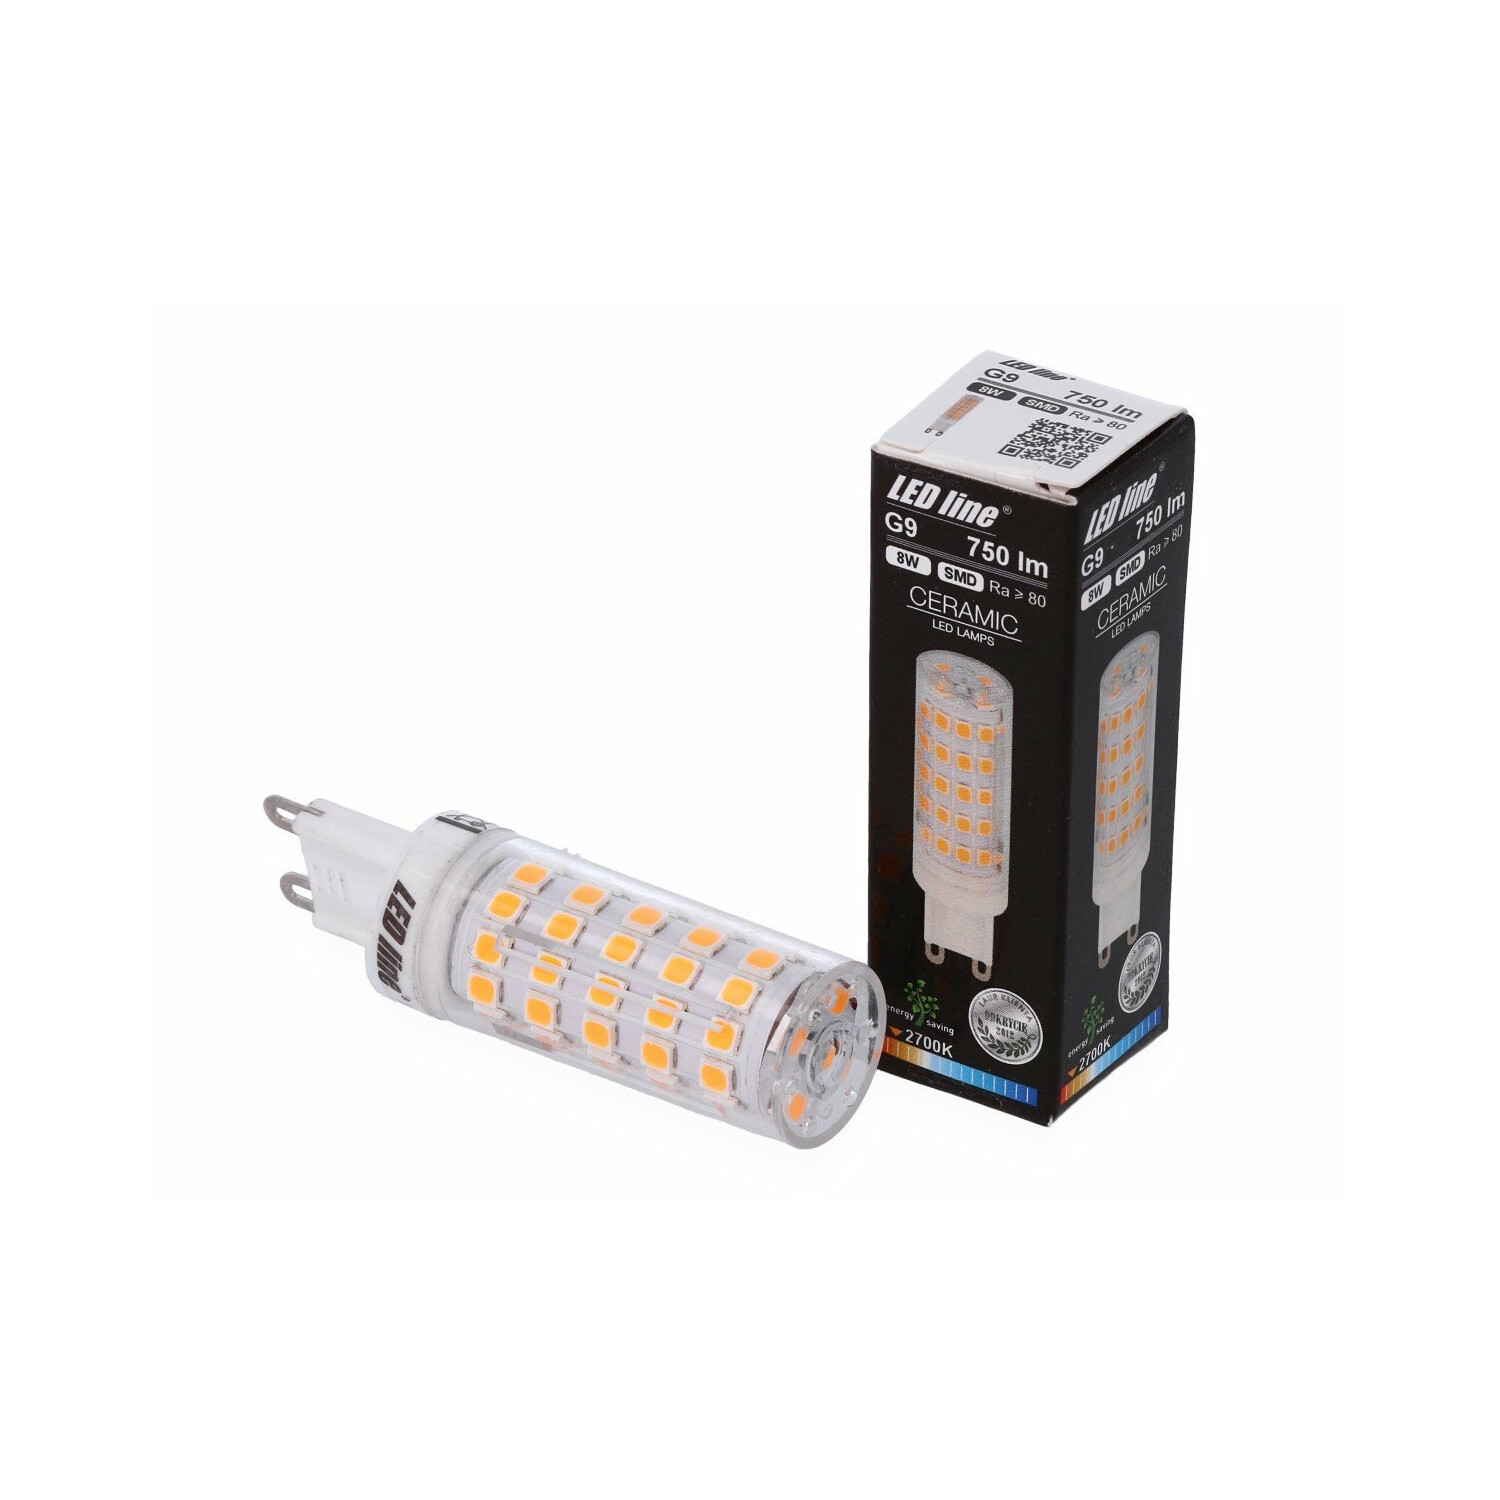 LED LINE G9 LED 10er Lumen Leuchtmittel 8W Pack LED 750 Warmweiß